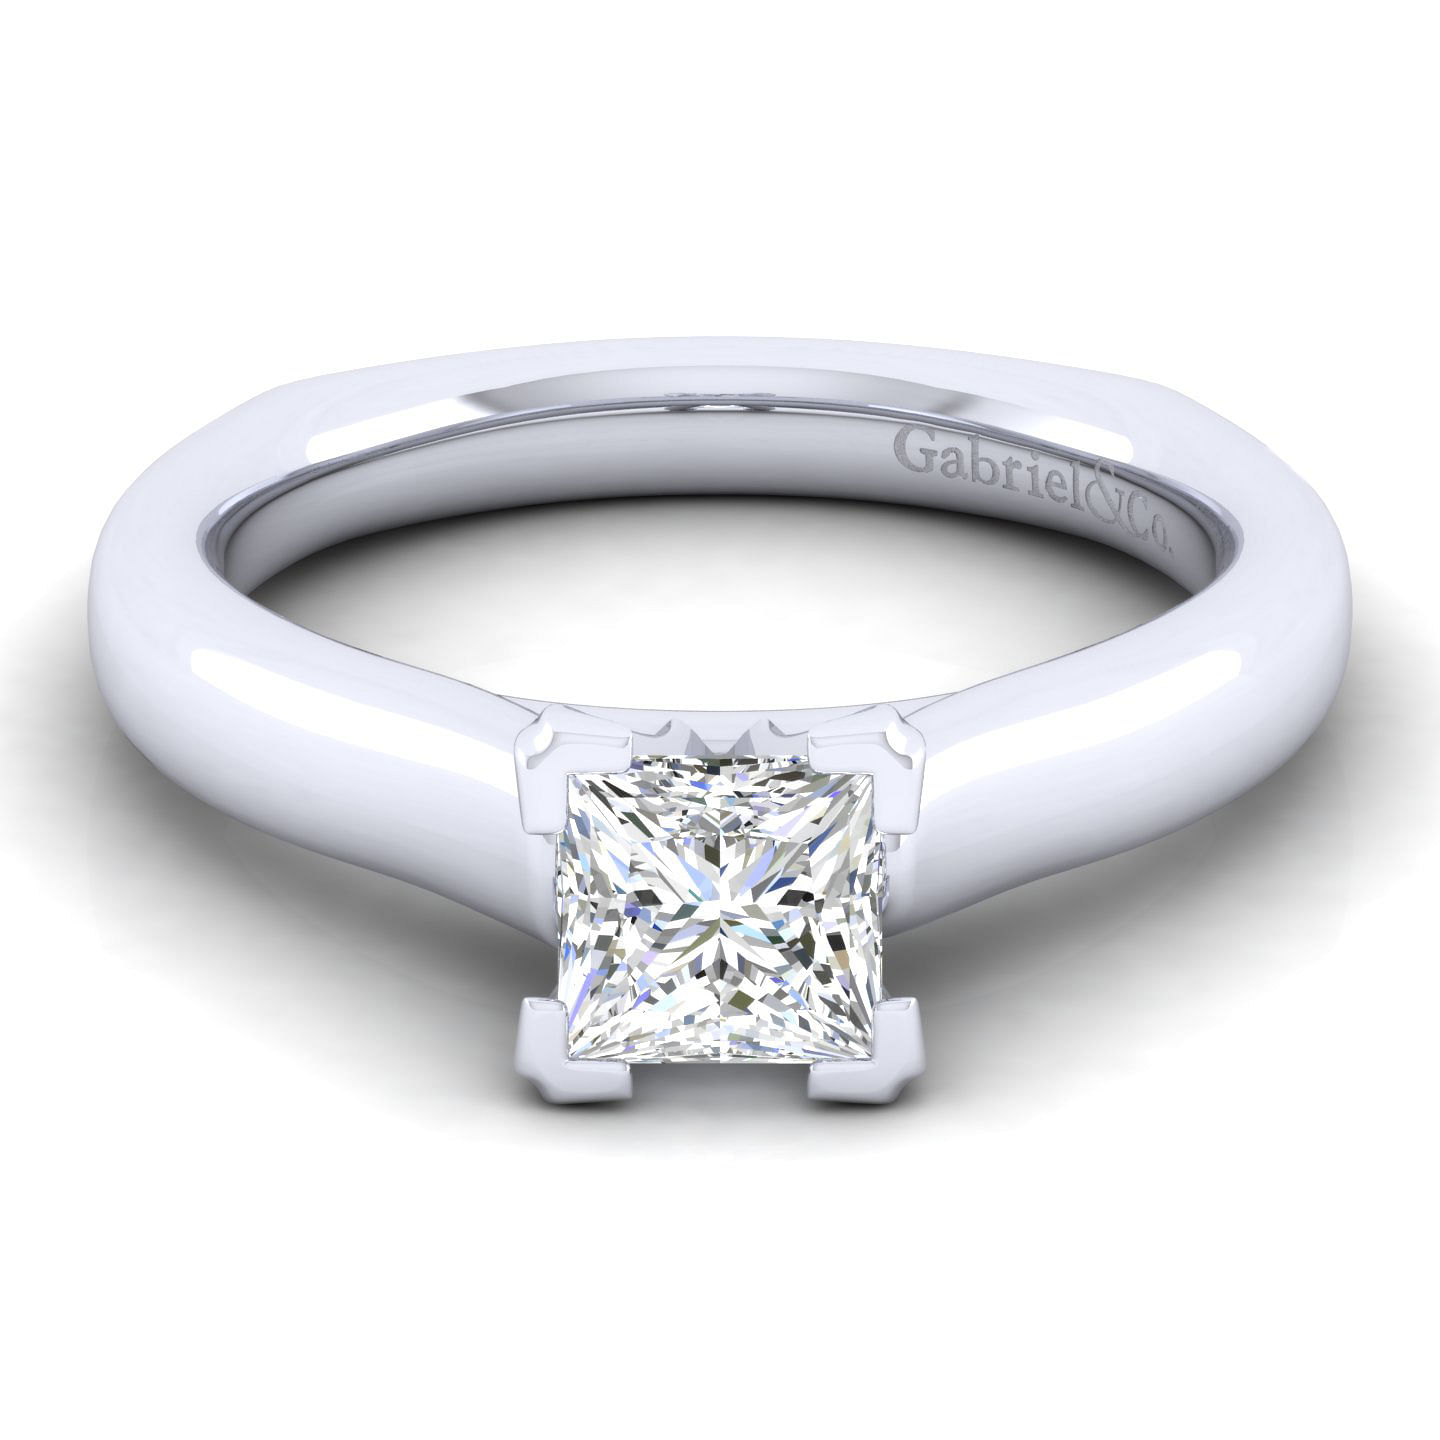 Winter - 14K White Gold Princess Cut Diamond Engagement Ring